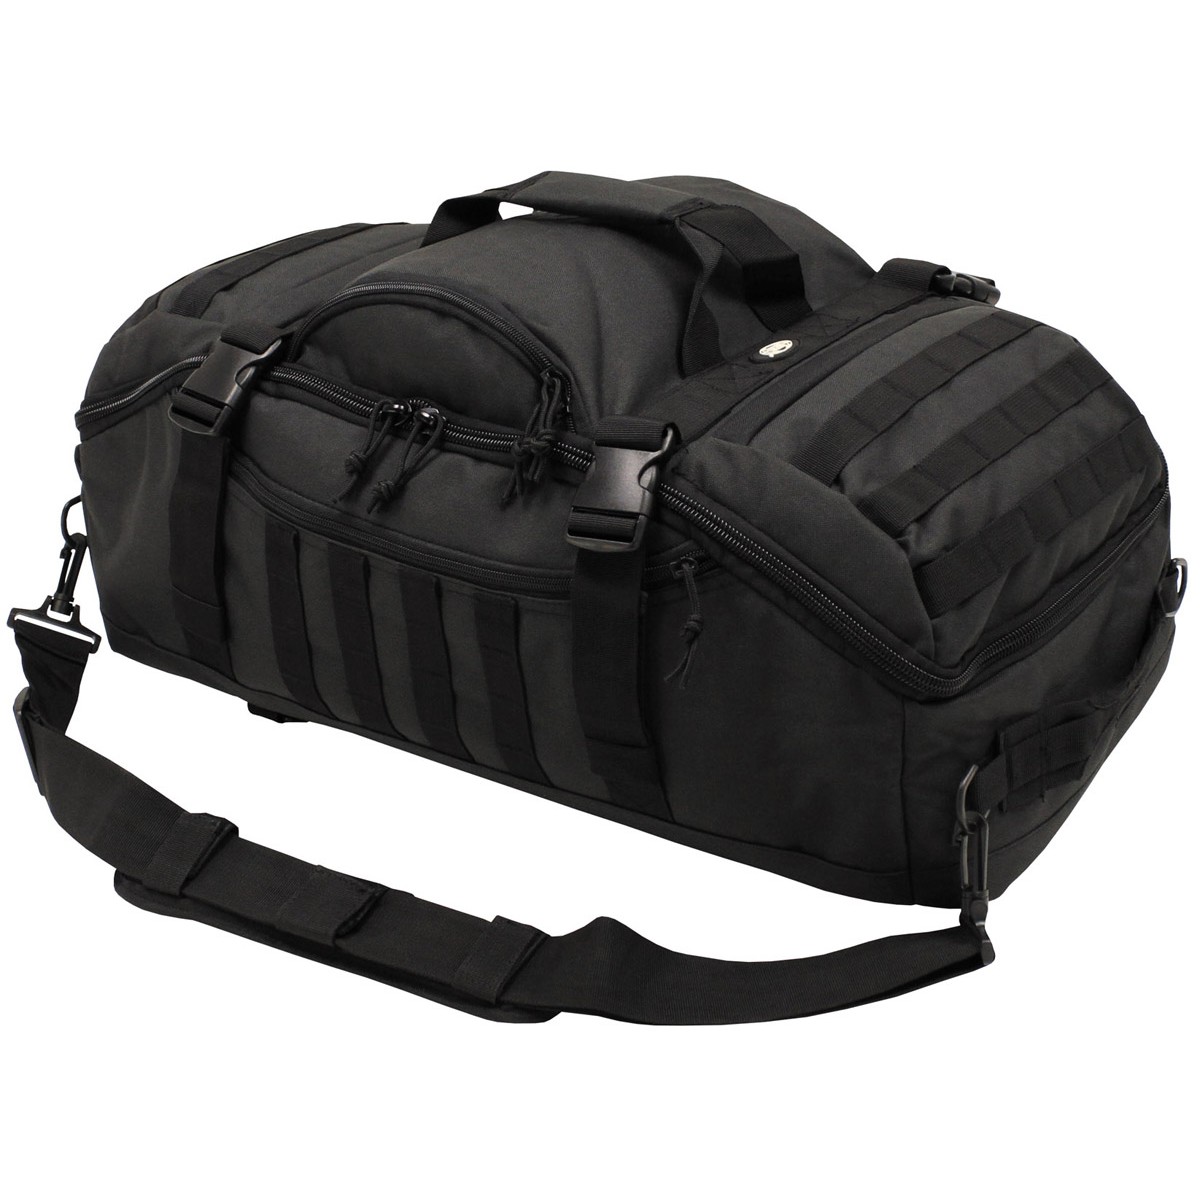 MFH® Tactical Shooters Range Transport Travel Bag 48L - Police Black